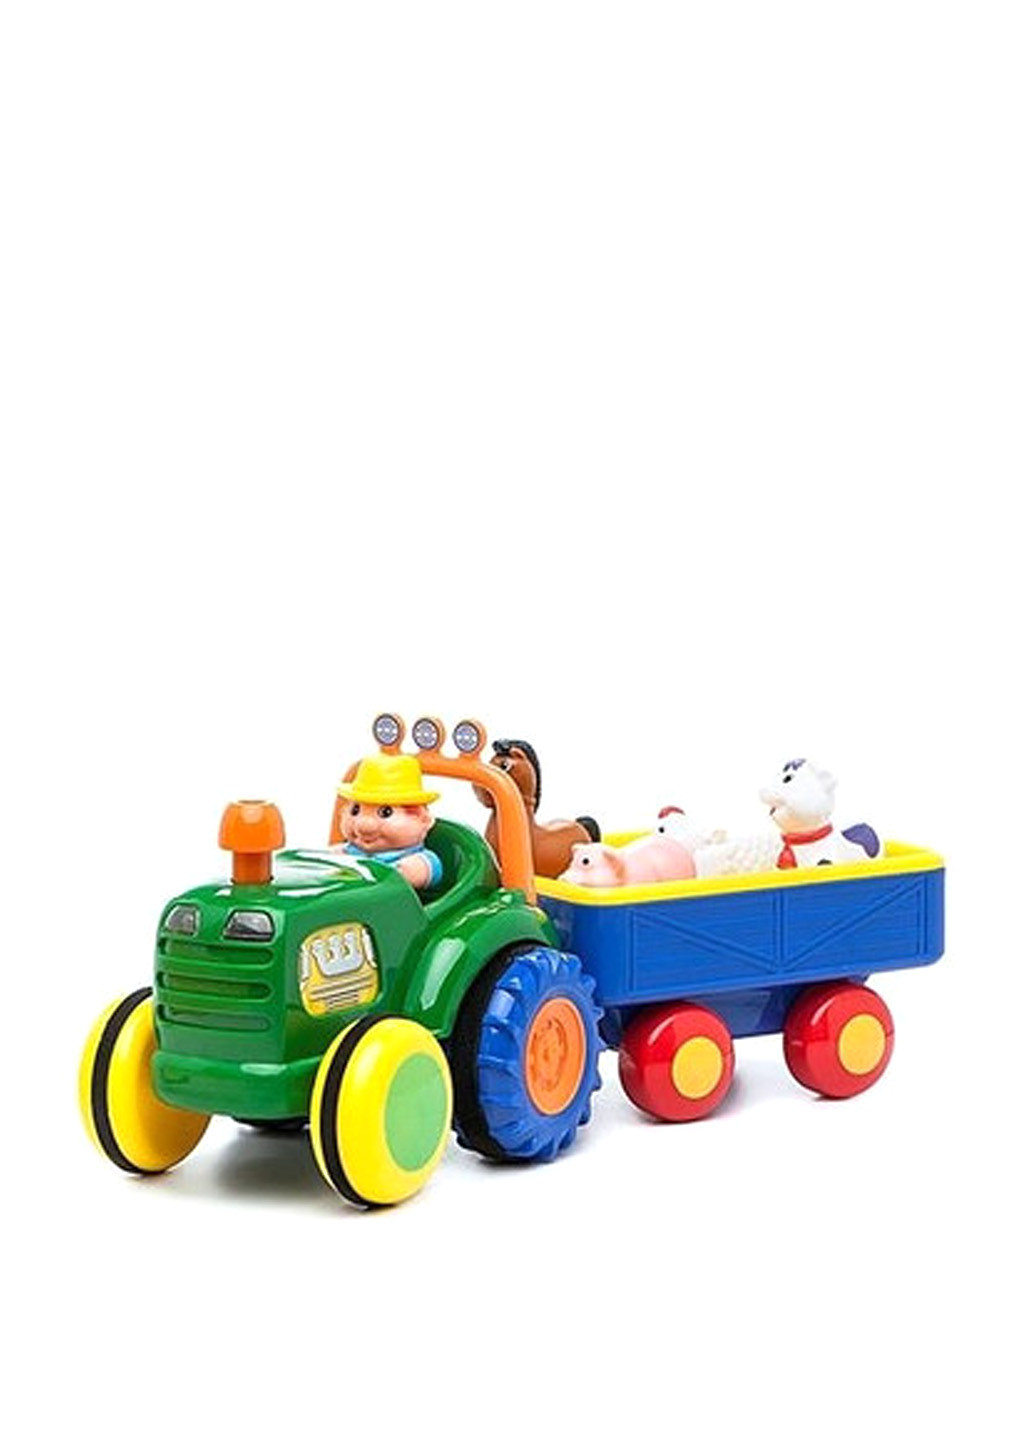 Іграшка на колесах - ТРАКТОР З ТРЕЙЛЕРОМ (на колесах, світло, озвуч. укр. яз.) Kiddieland Preschool (17015379)